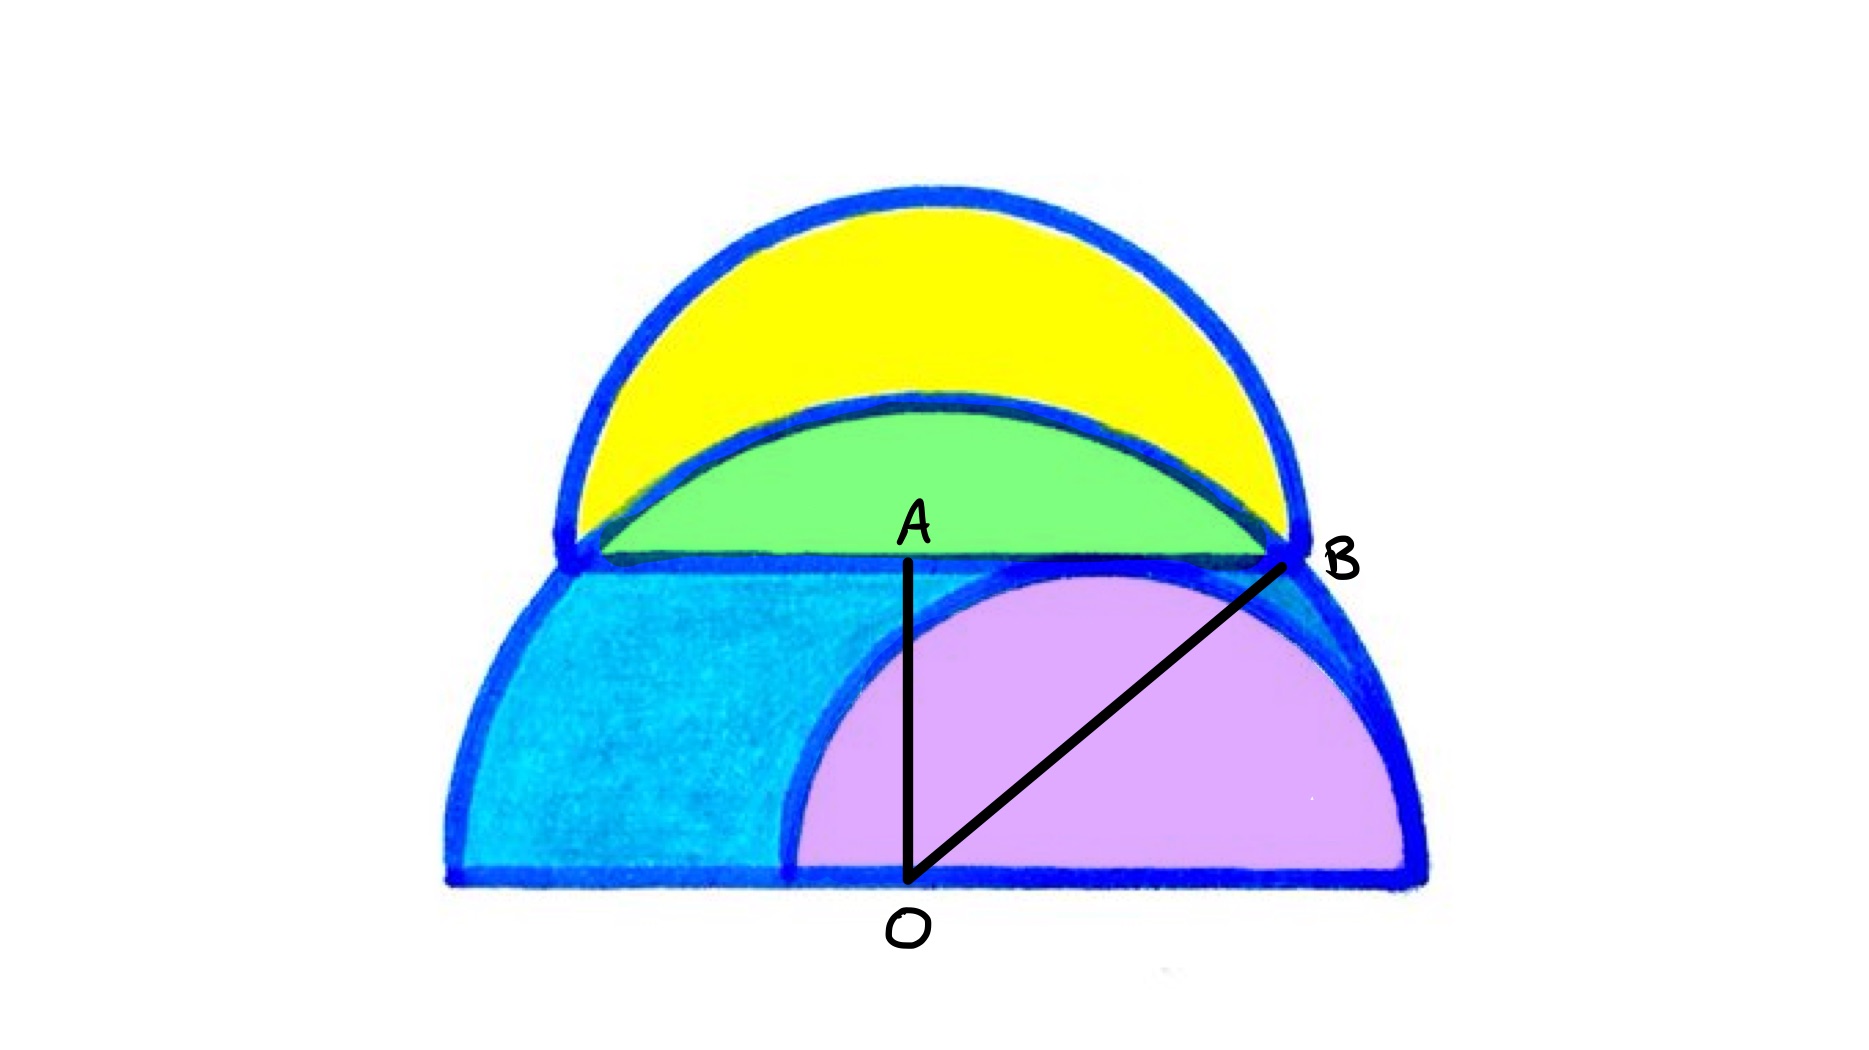 Three parallel semi-circles labelled